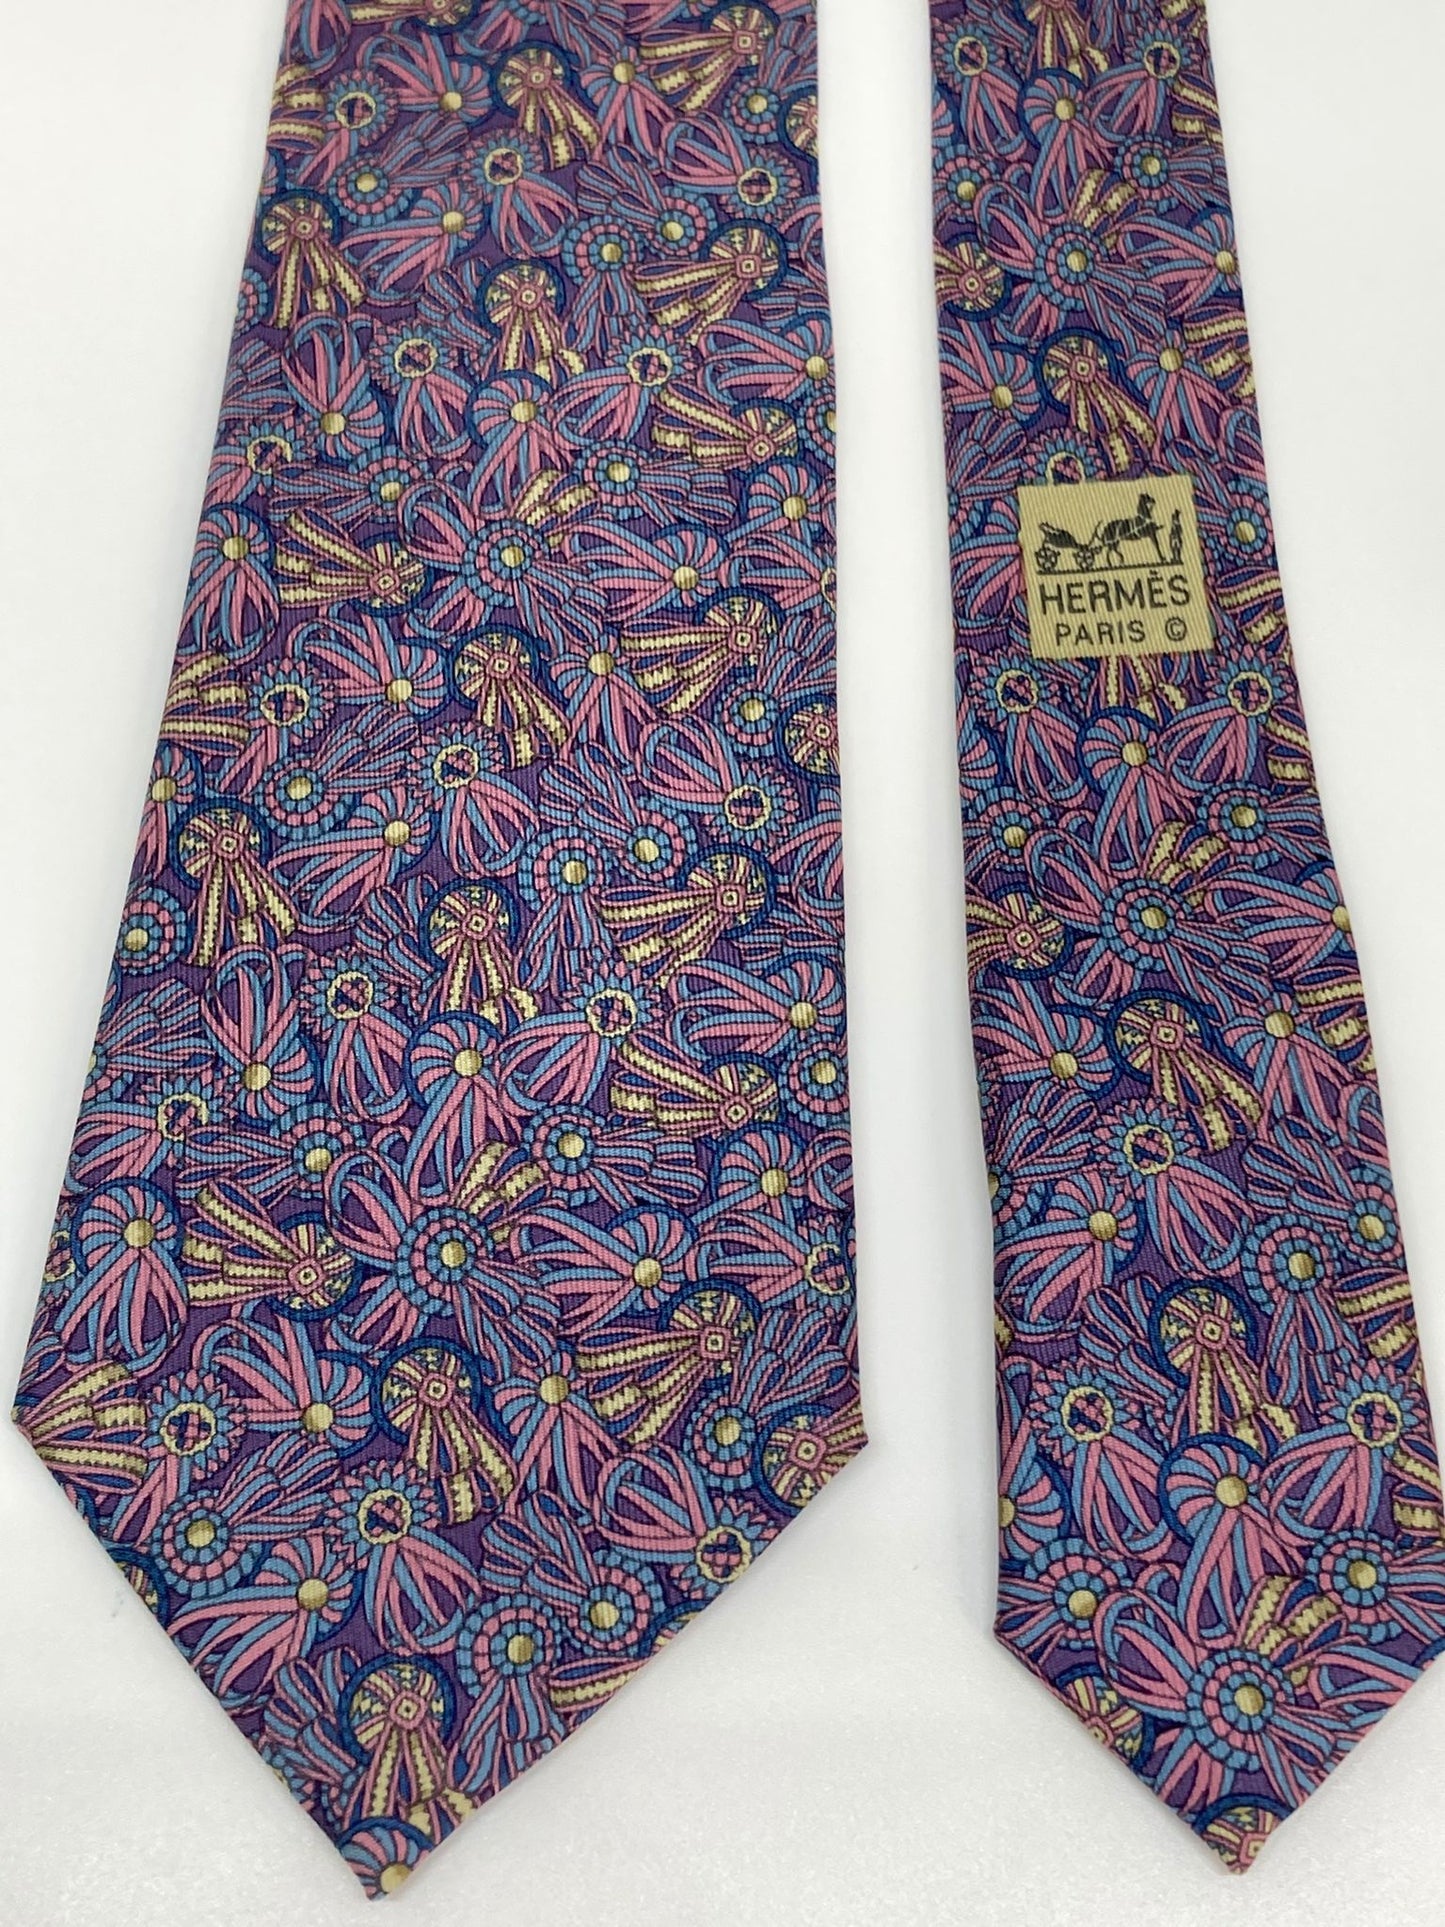 Cravatta Hermès con stampa fantasia carnevale c.7170FA